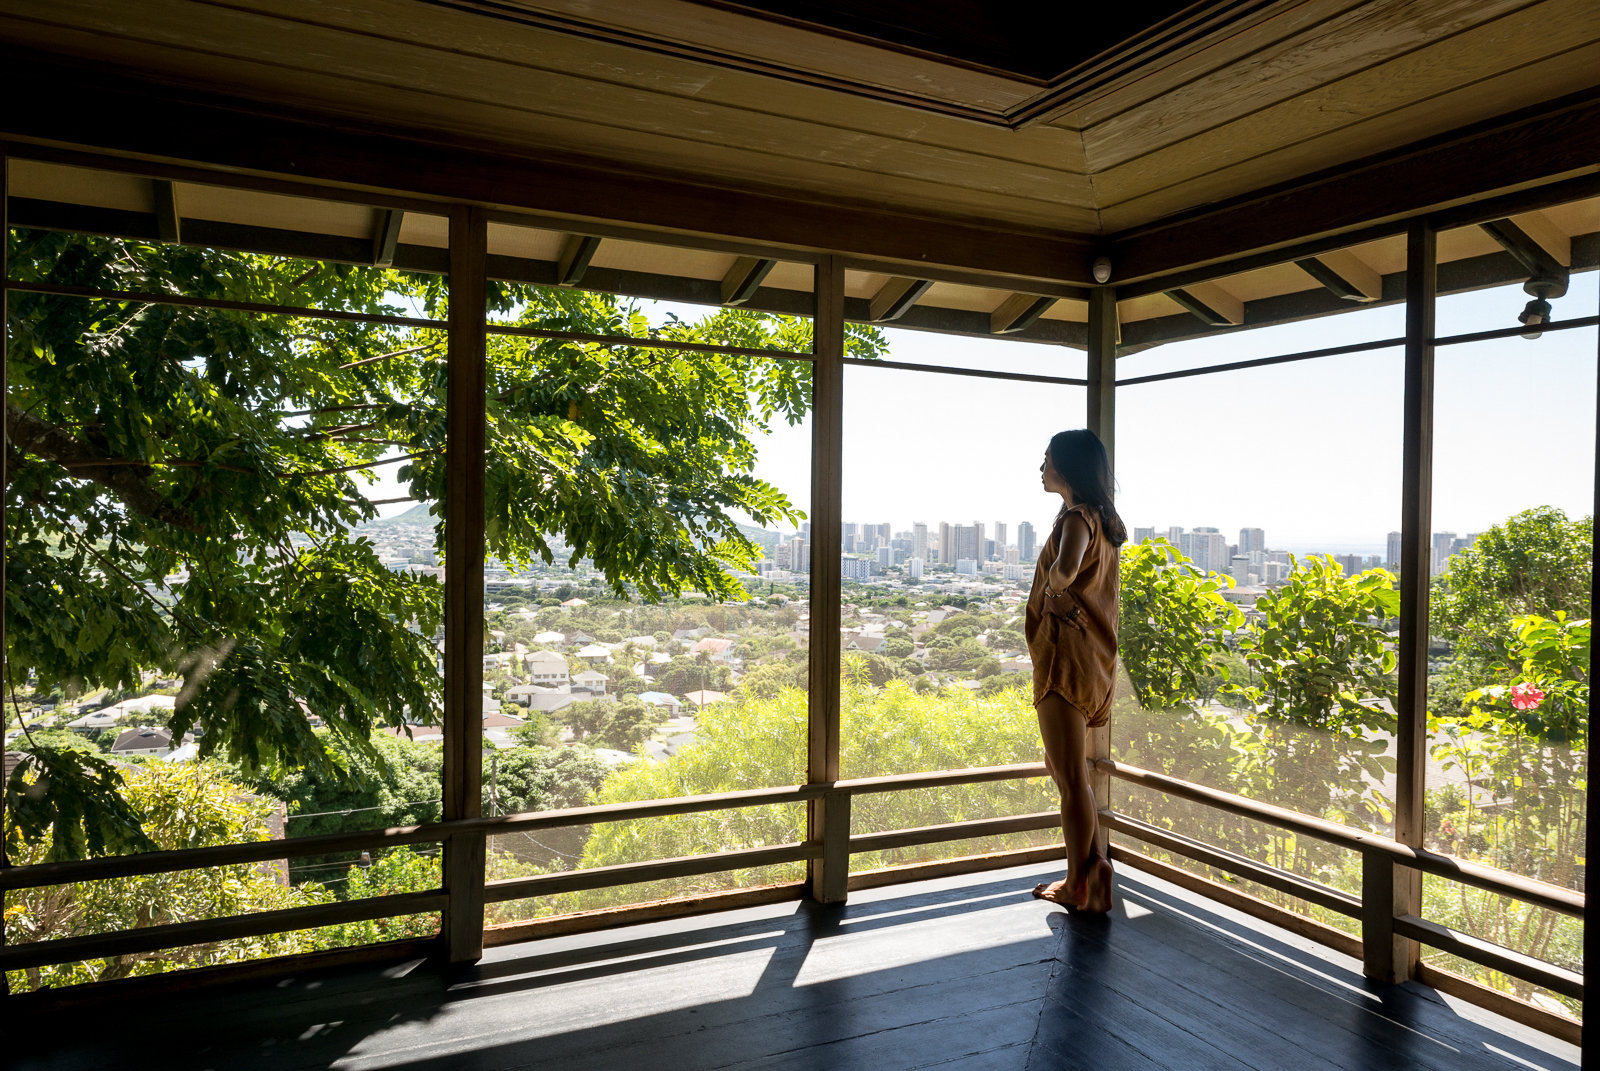 jordan higa's incredible home with a view in hawaii